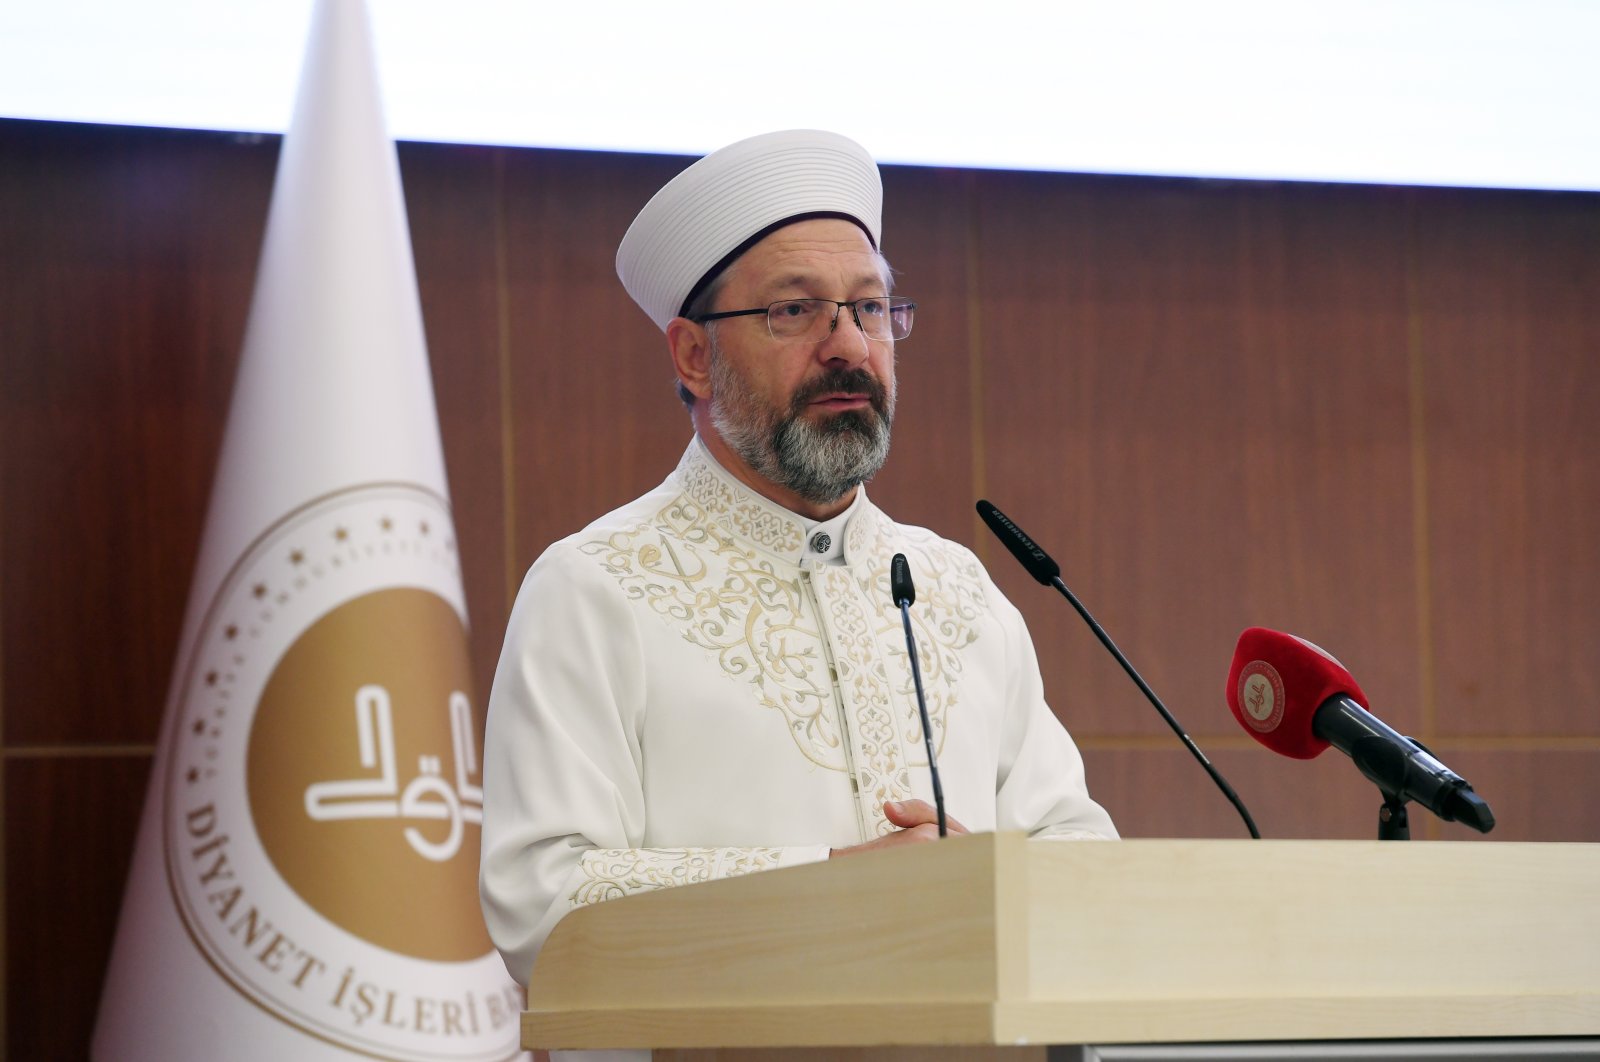 Presidency of Religious Affairs (Diyanet) head Ali Erbaş delivers a speech in the capital Ankara, Türkiye, Jan. 20, 2023. (IHA Photo)